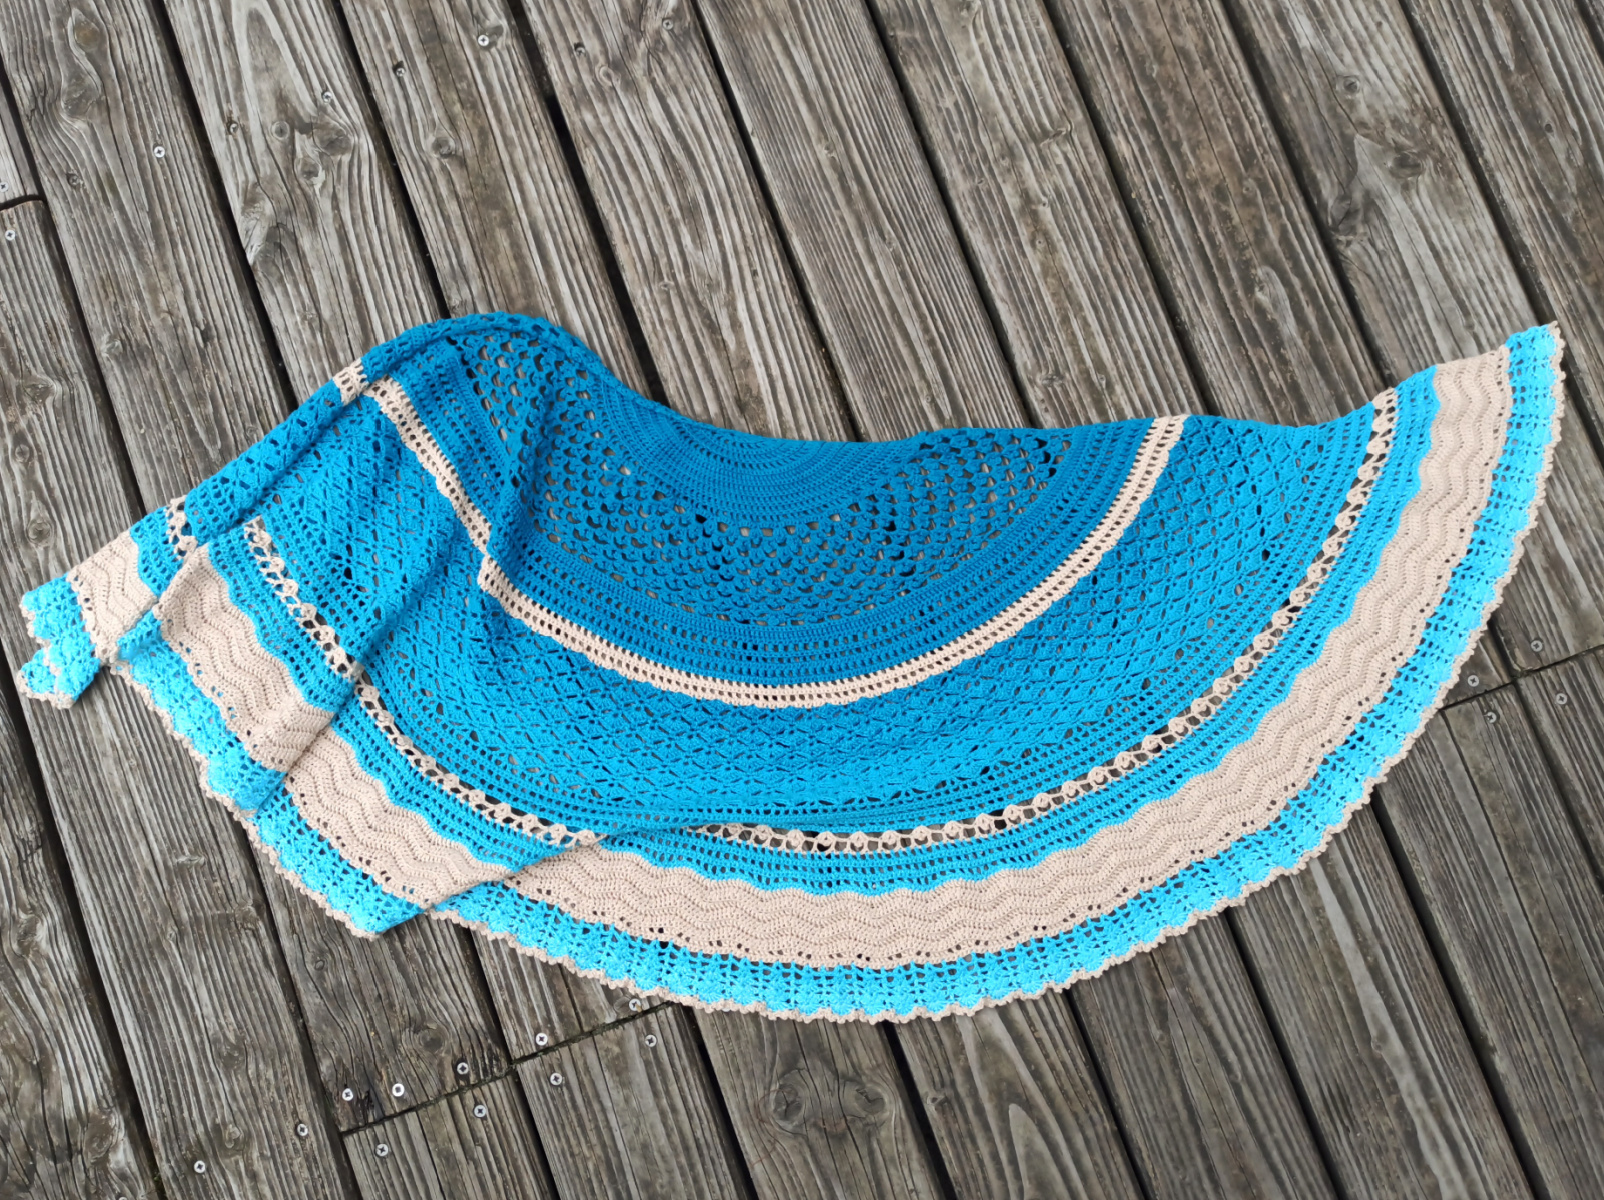 On the Beach – crochet a summer shawl!